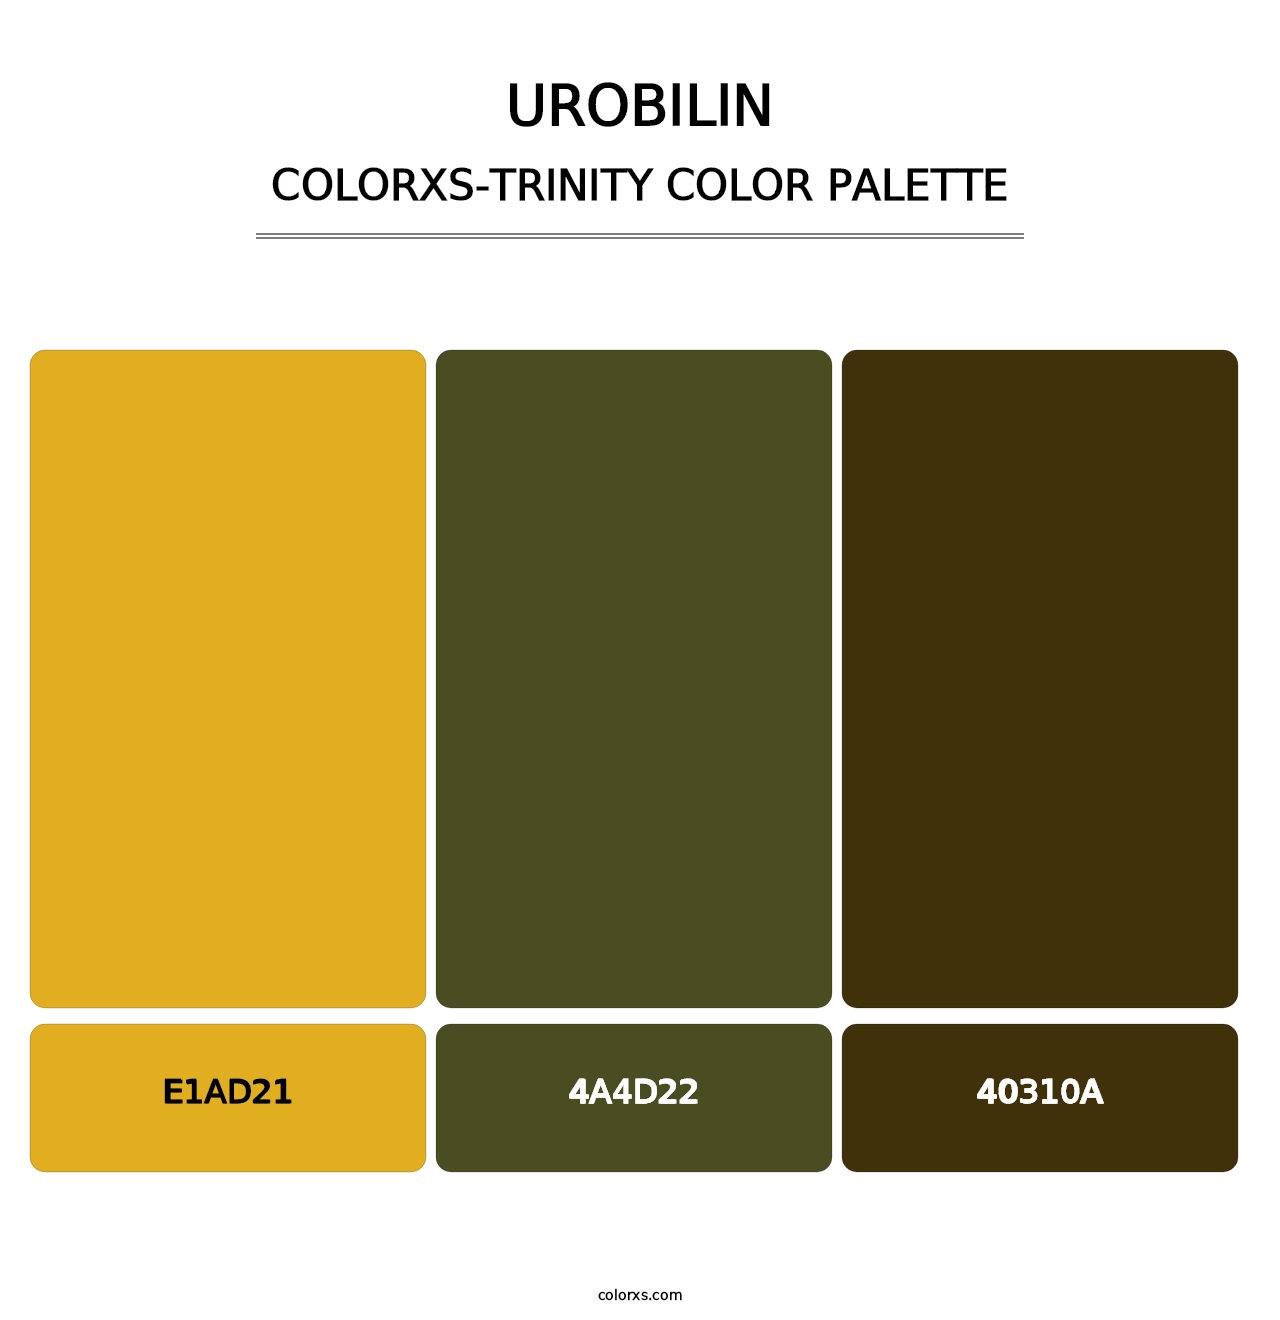 Urobilin - Colorxs Trinity Palette